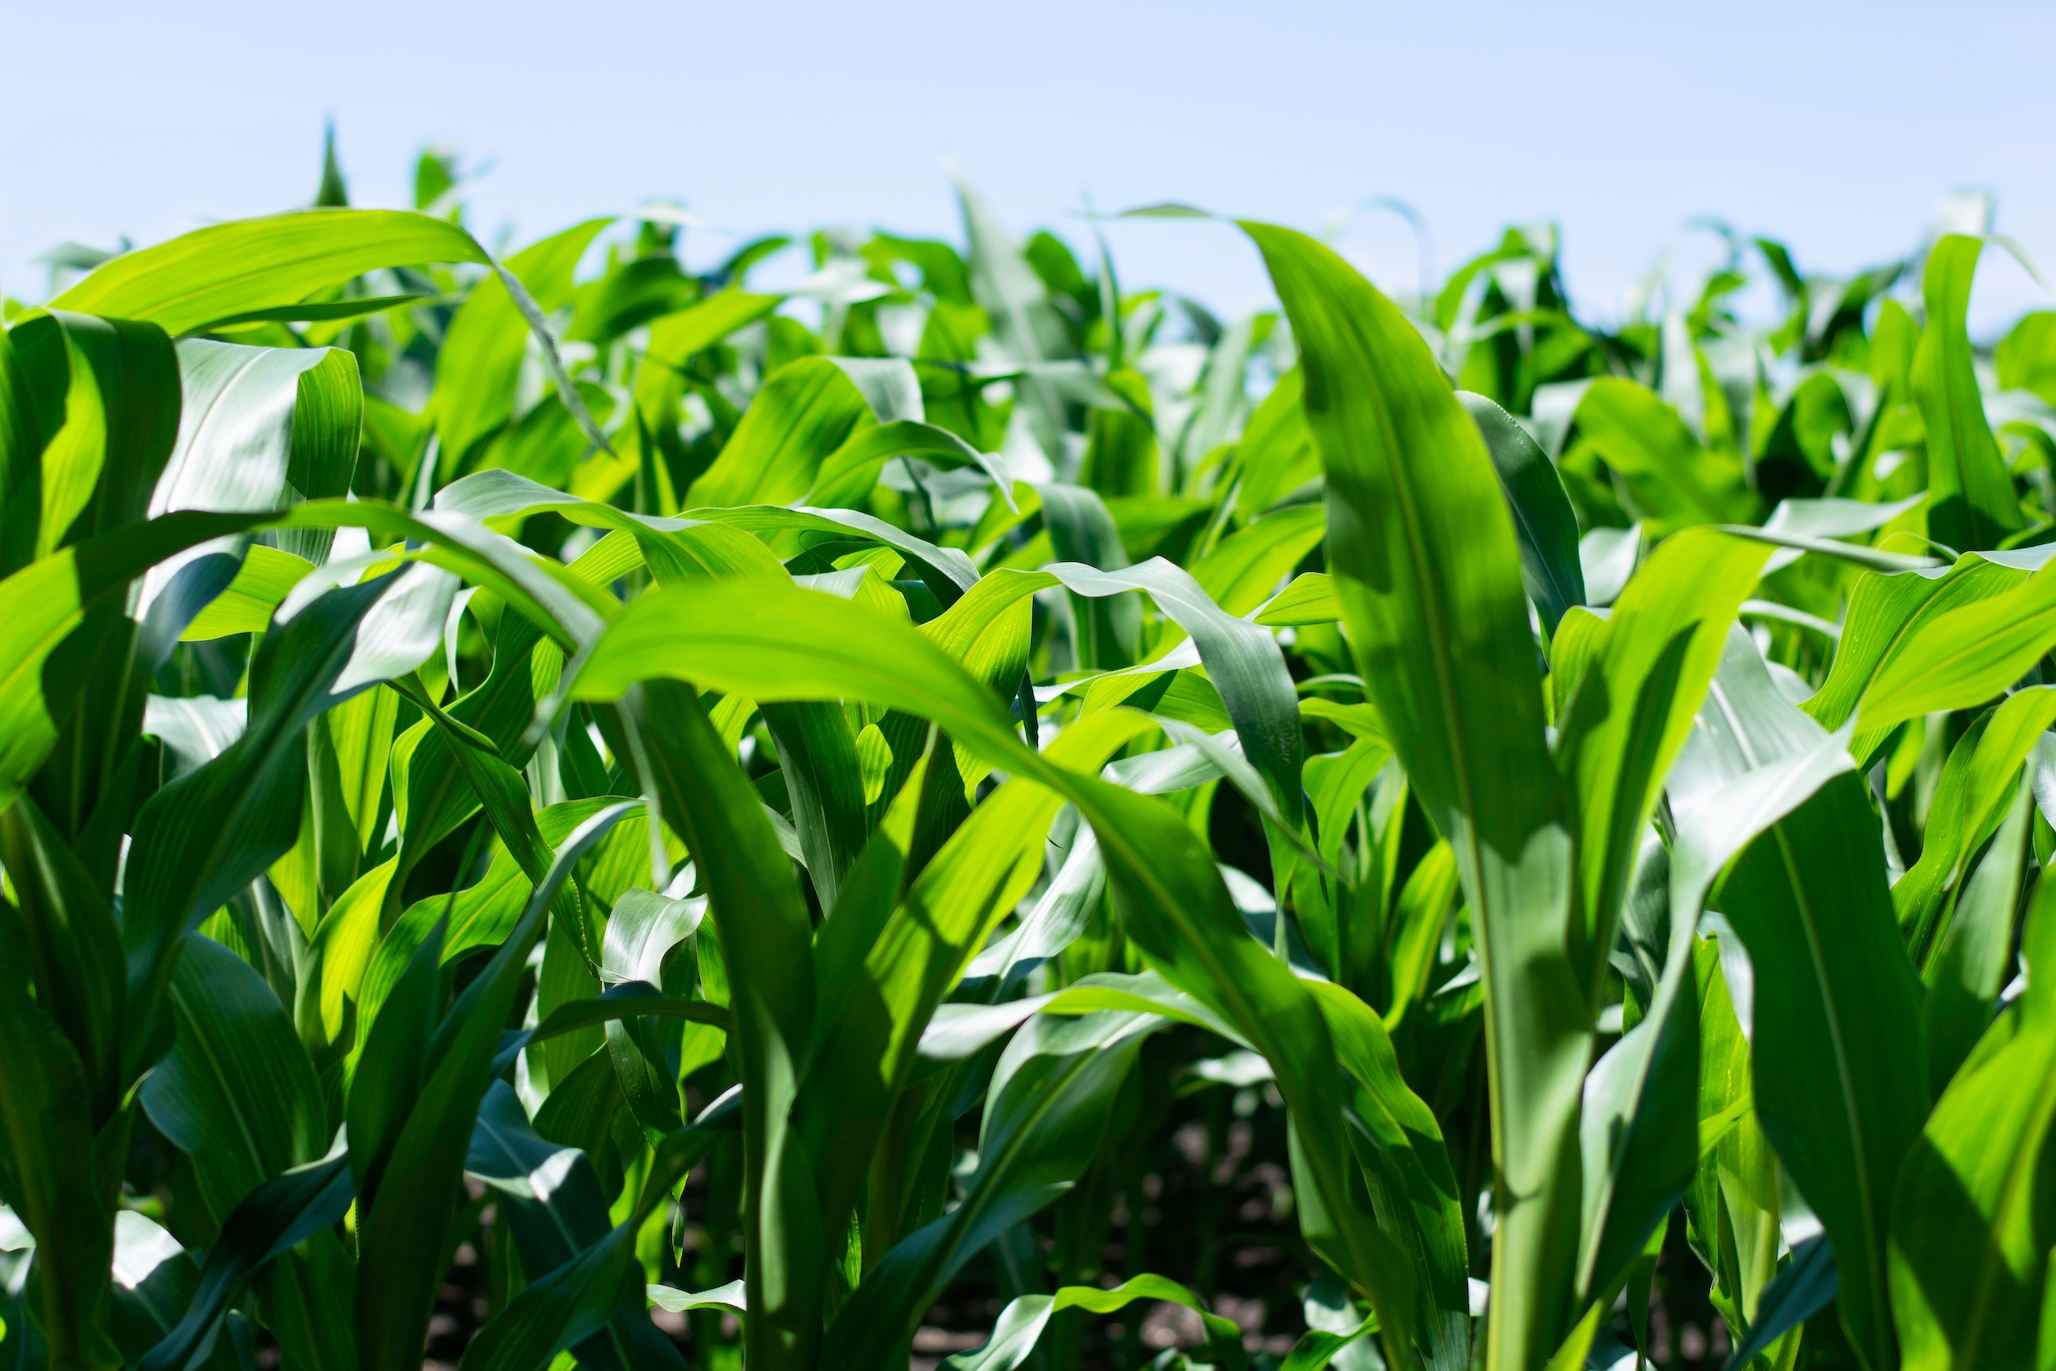 https://otc.duke.edu/wp-content/uploads/2022/08/green-corn-crops-field-landscape-on-bright-summer-8GFJ8AT-1.jpg